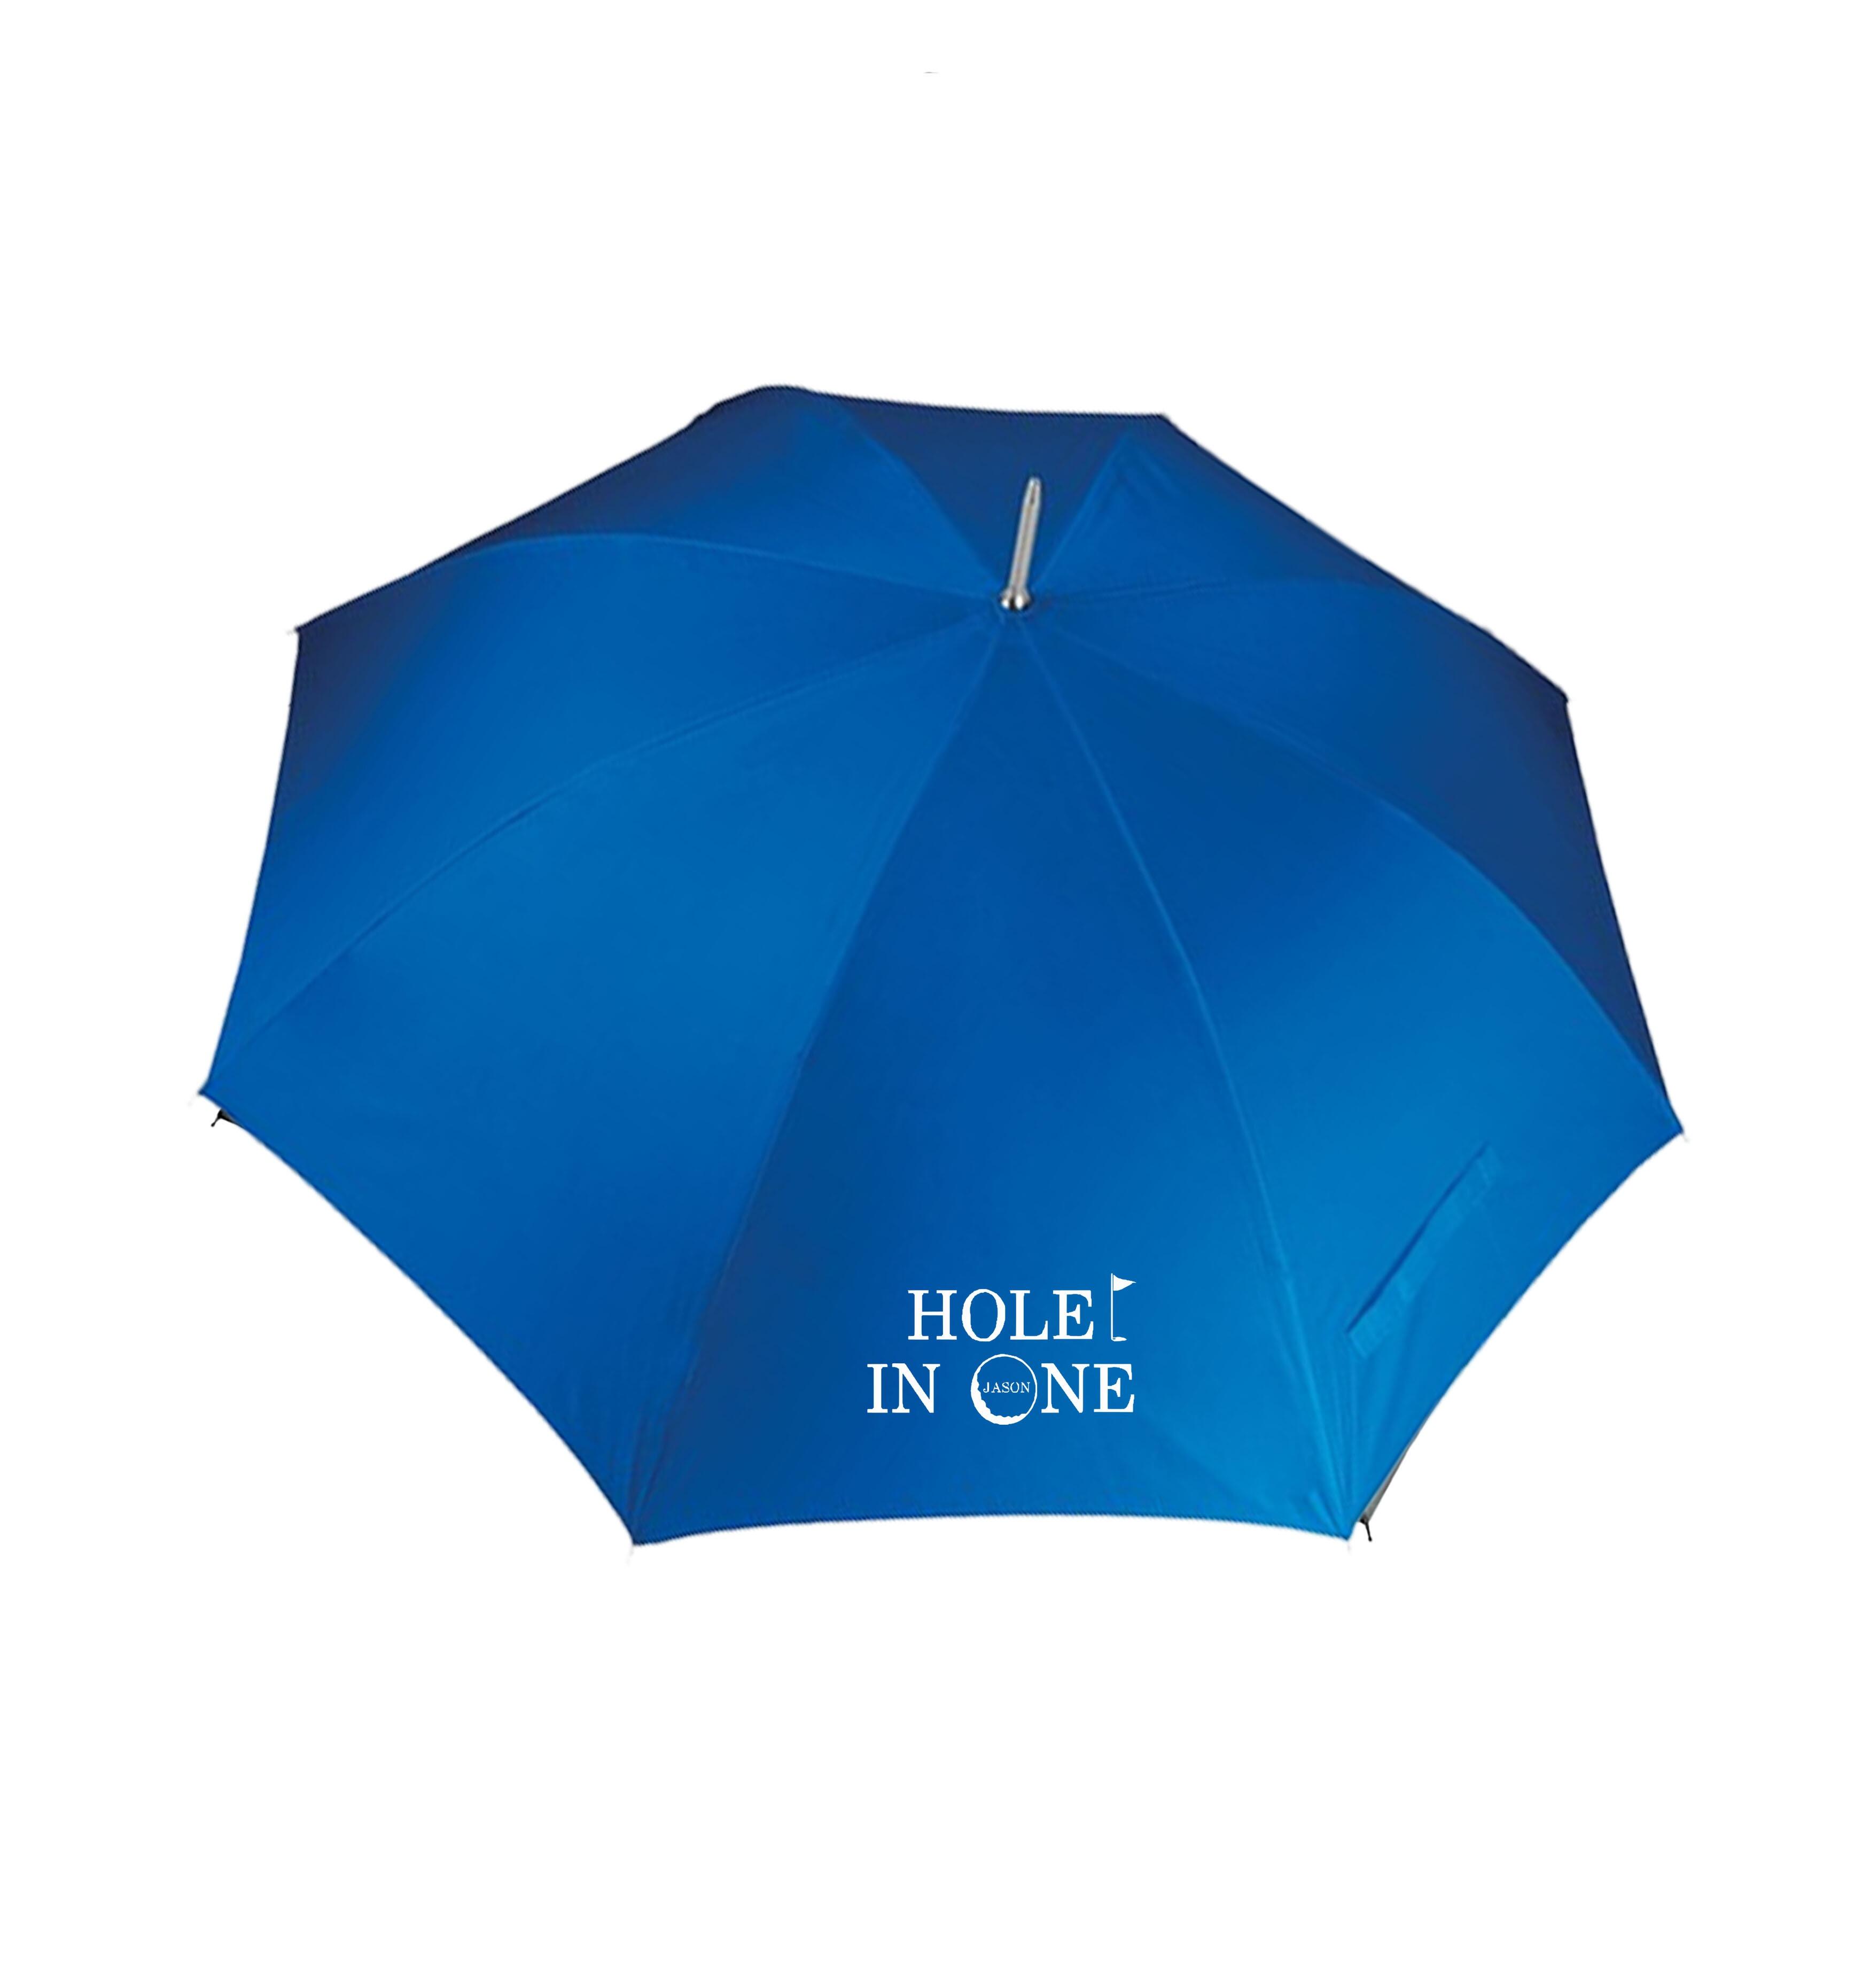 Hole in 1 Design Large Golf Umbrella Royal Blue